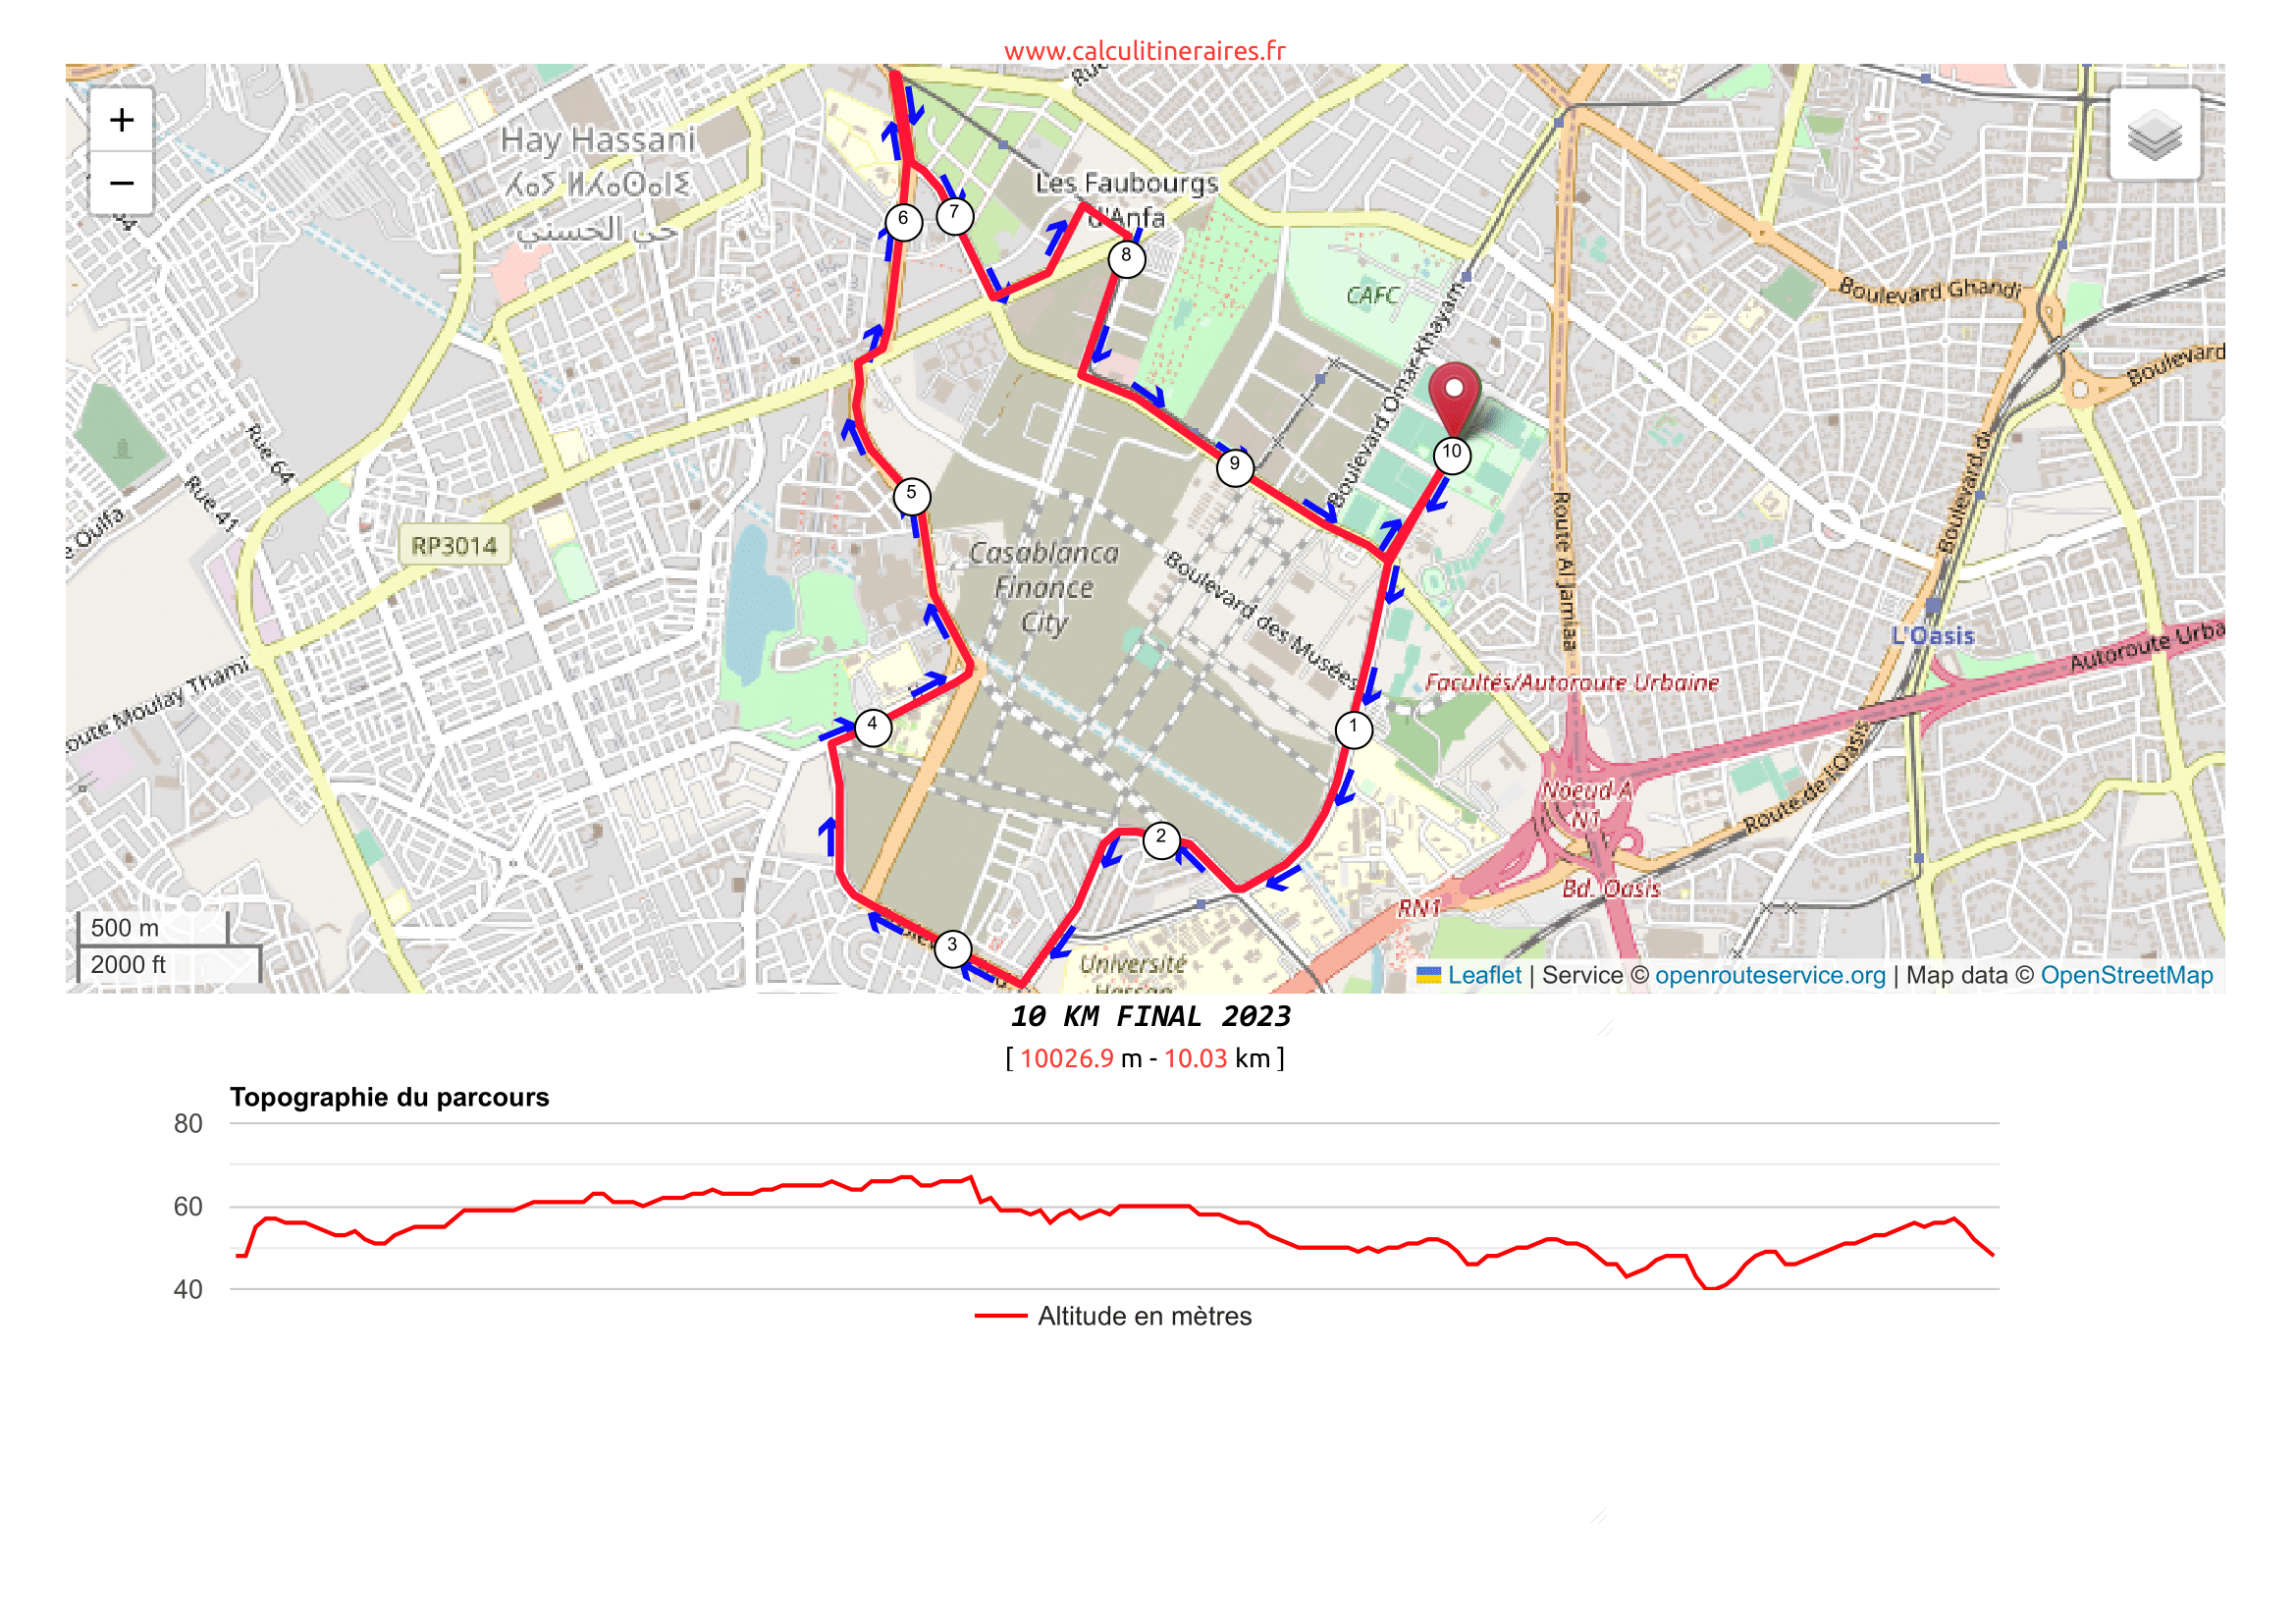 10 KM